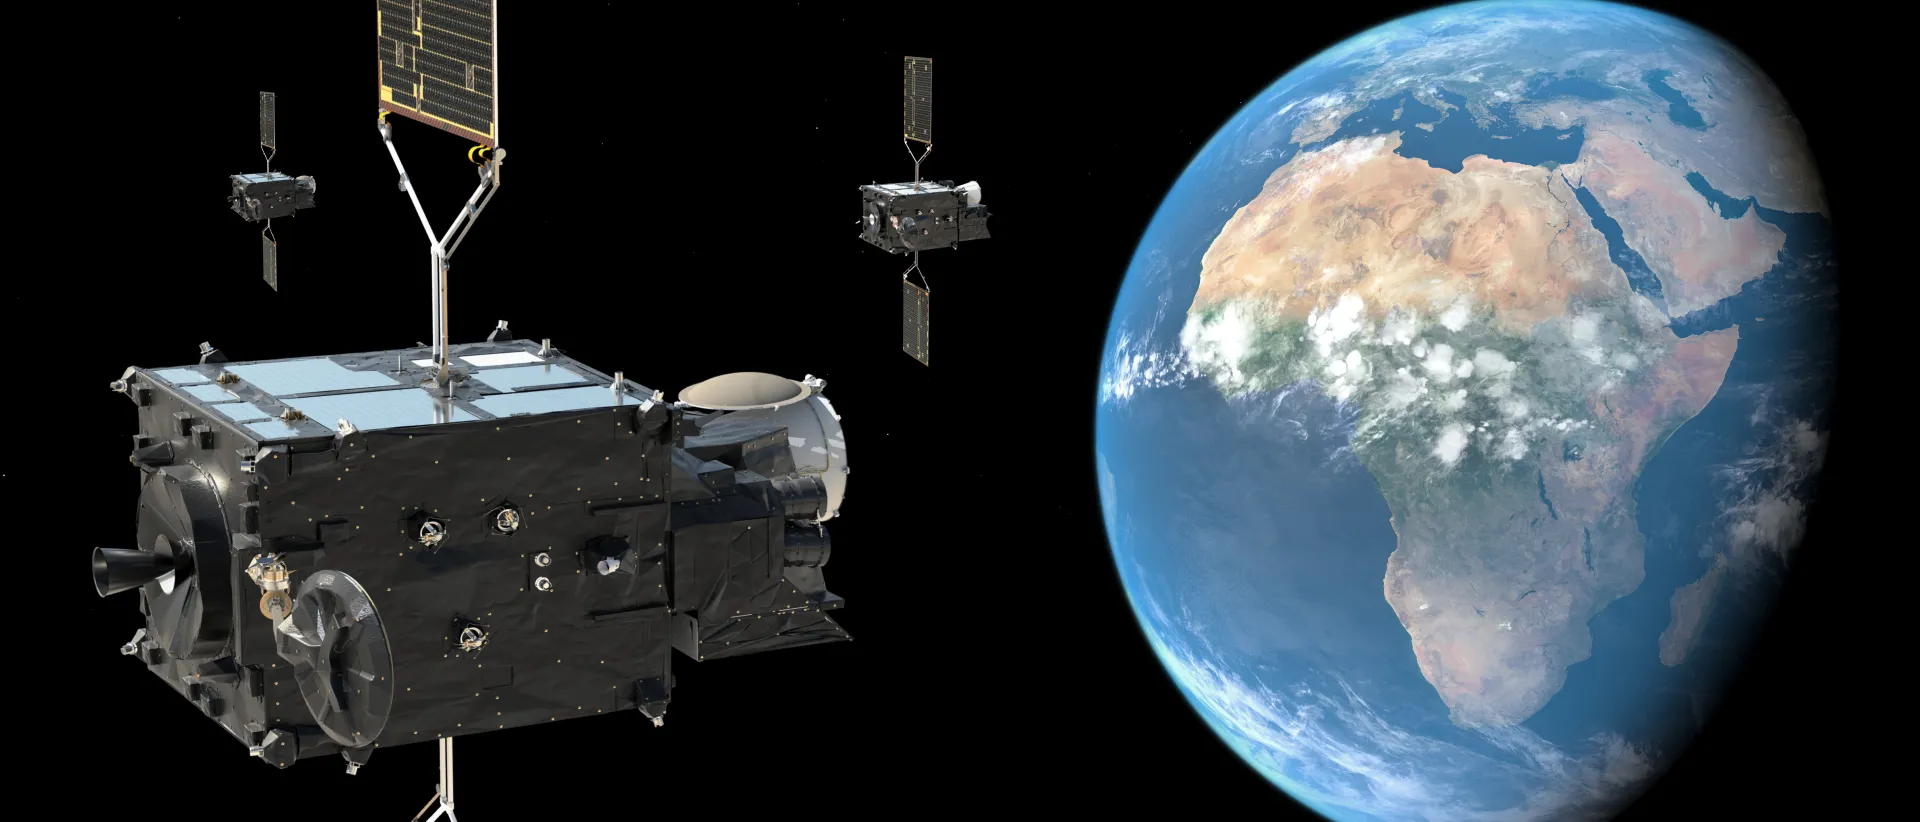 Meteosat Third Generation weather satellites. Credit: ESA/Mlabspace, CC BY-SA 3.0 IGO